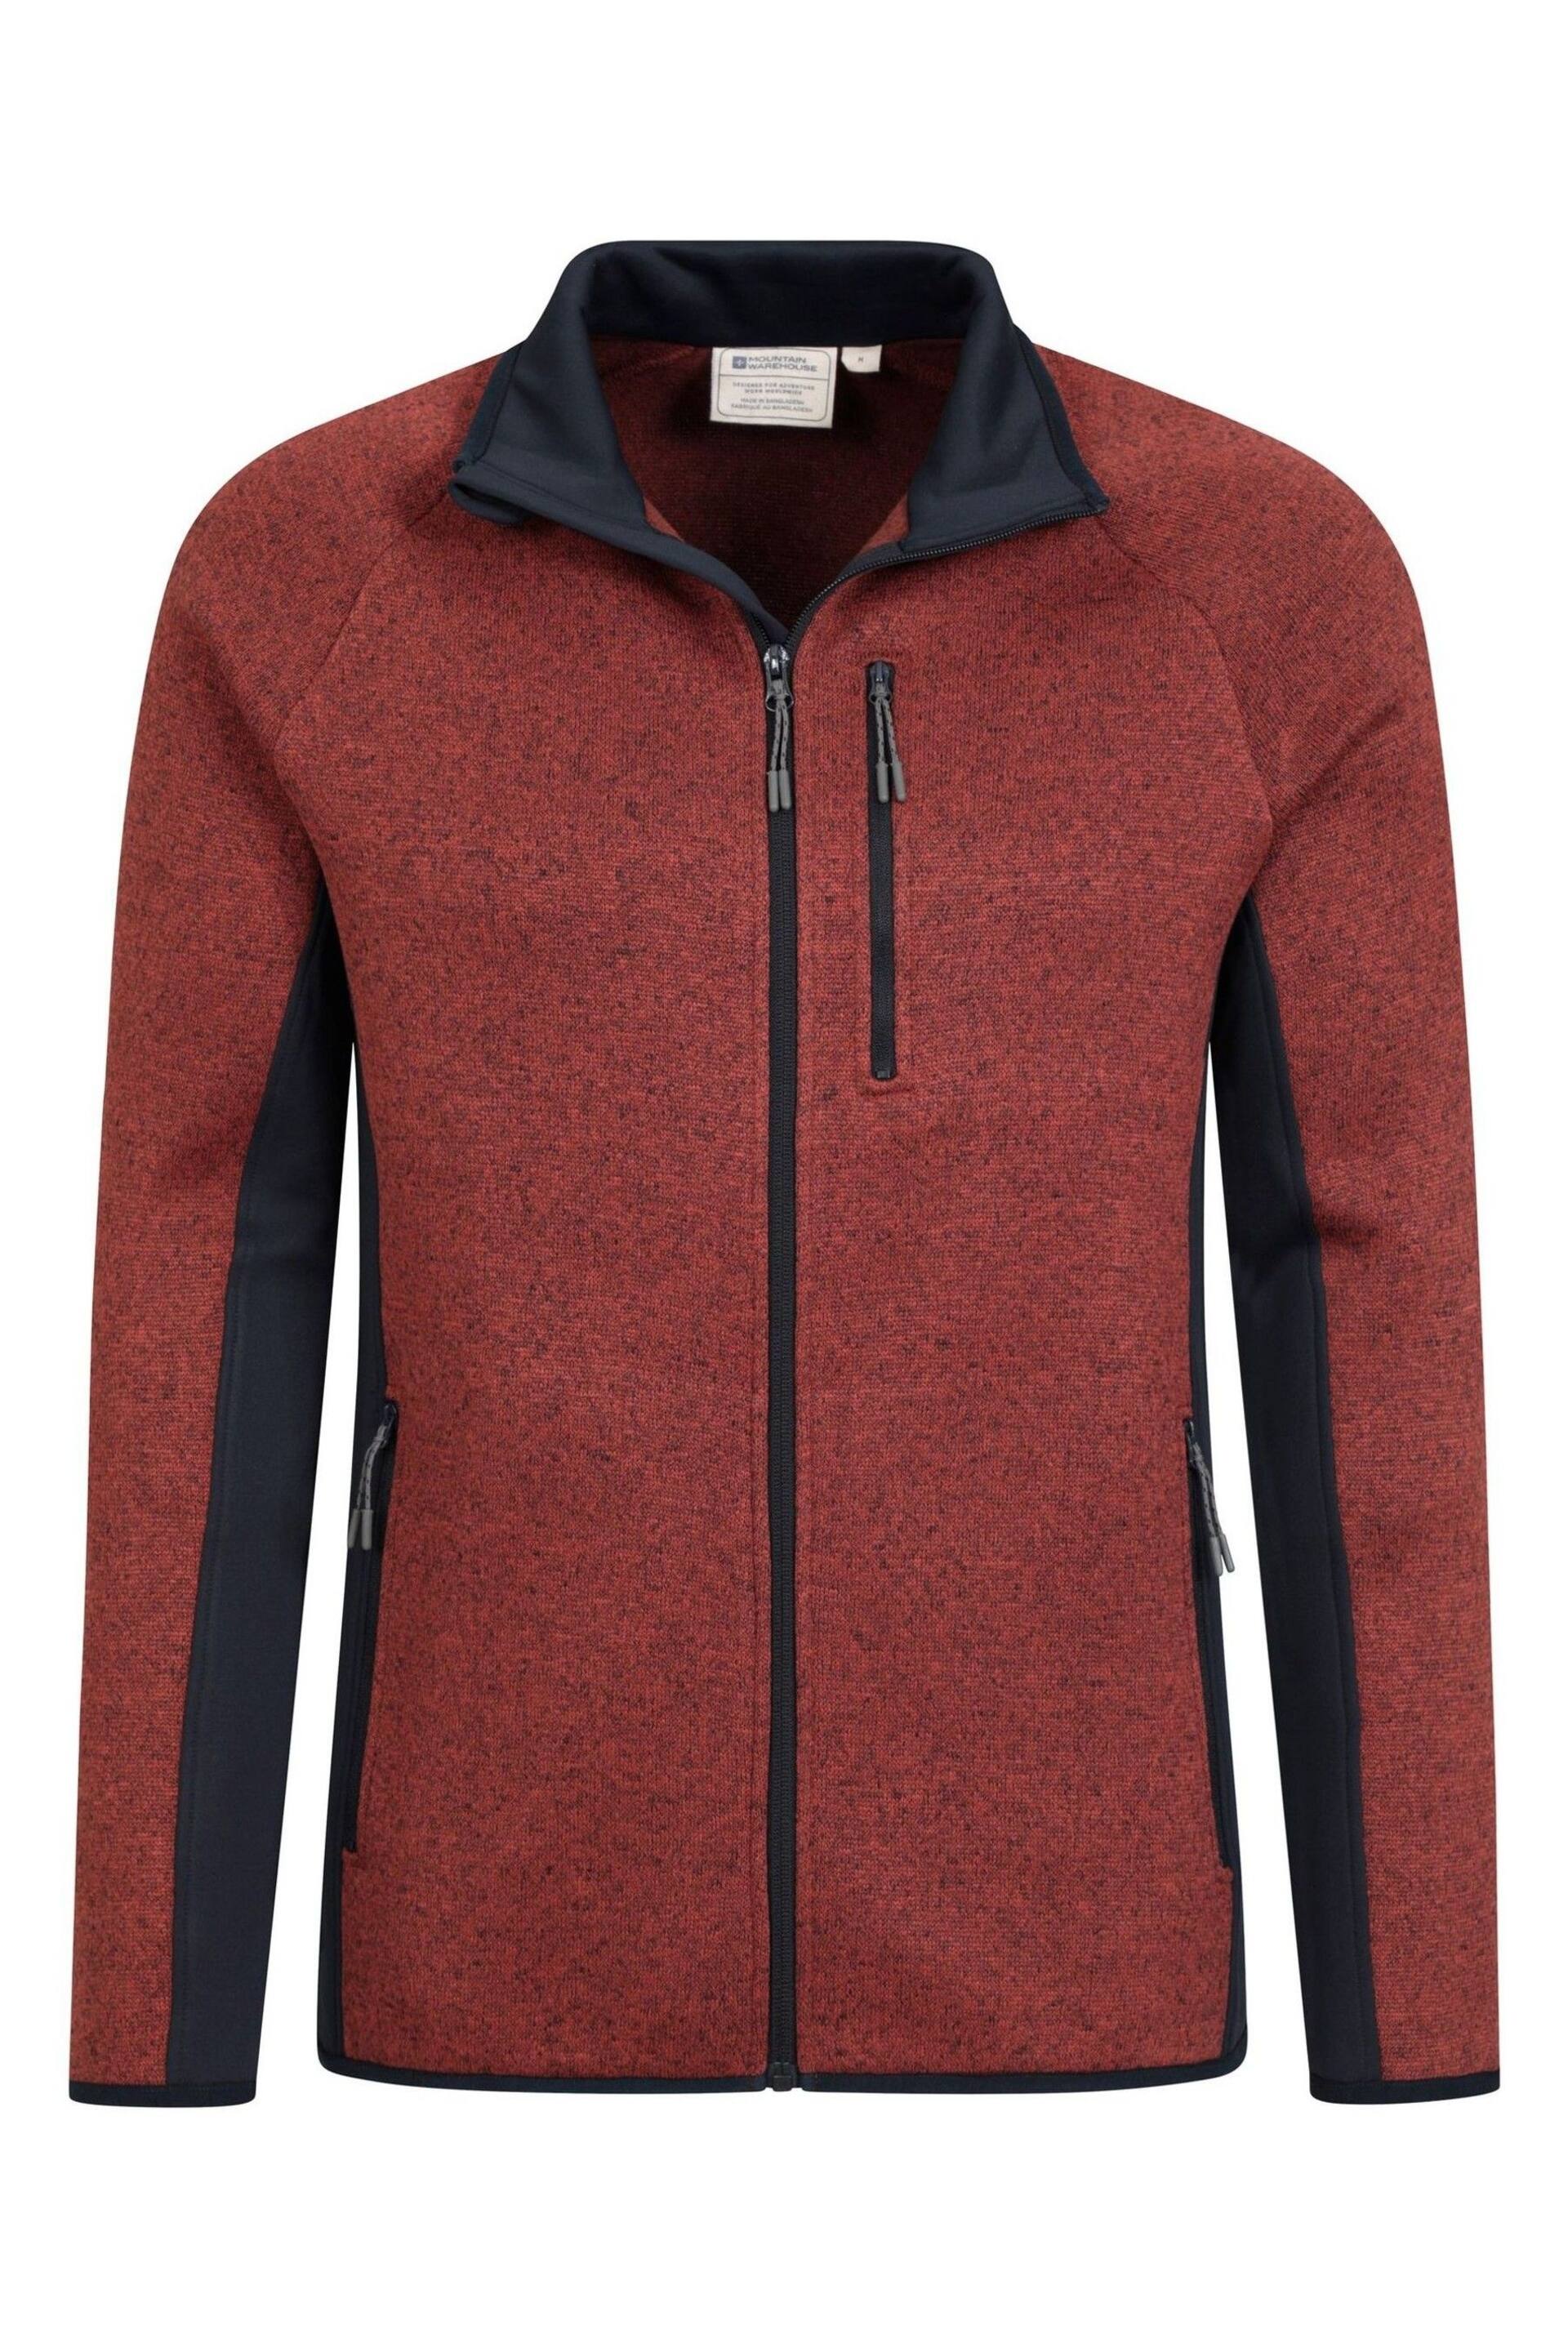 Mountain Warehouse Red Mens Treston Full Zip Fleece Jacket - Image 5 of 5